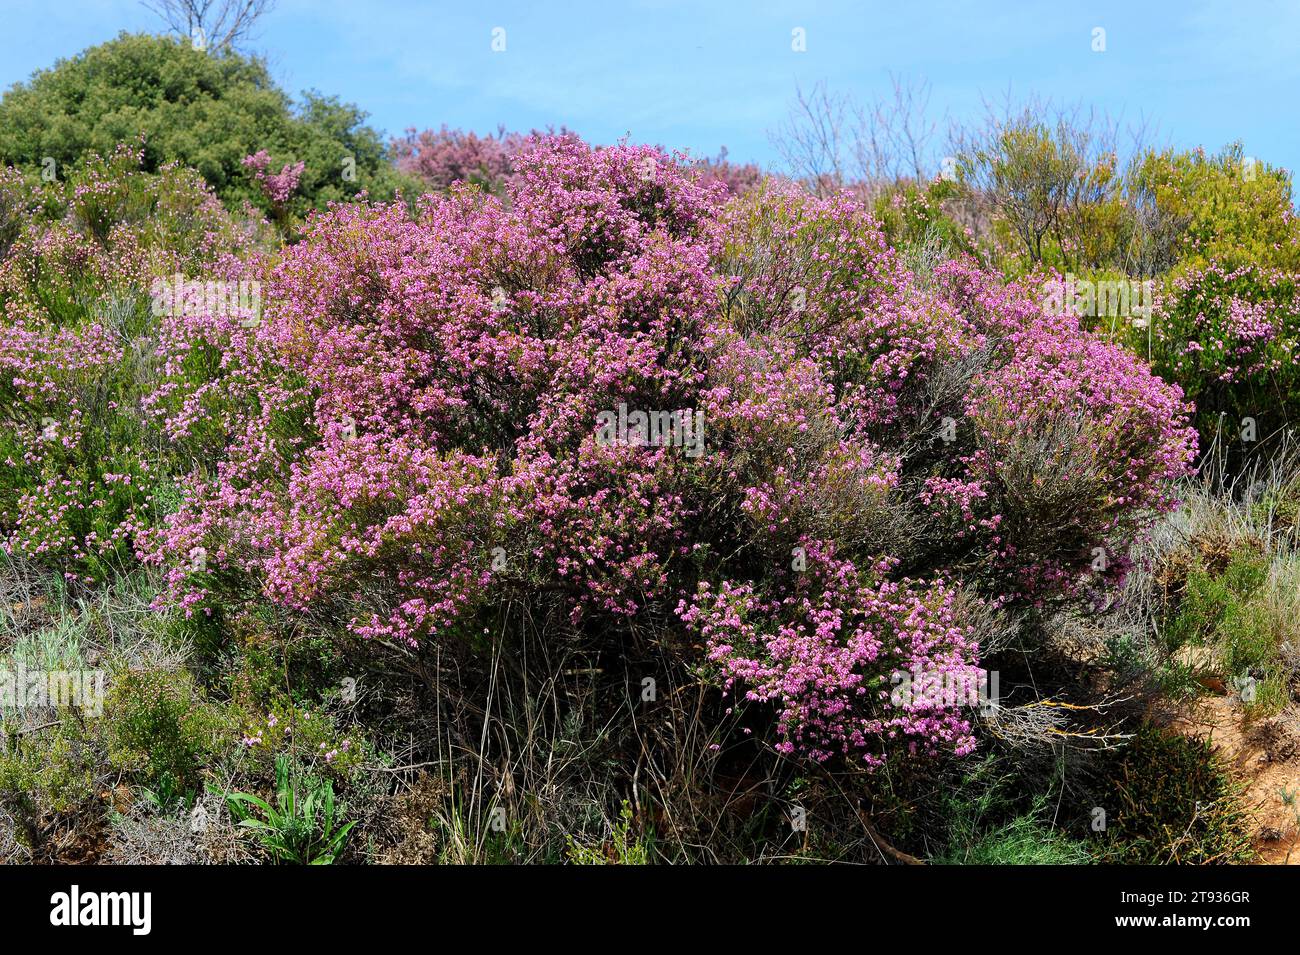 Brezo rubio (Erica australis) is a shrub endemic to western Iberian Peninsula and northwest Africa. This photo was taken in Las Medulas, Leon province Stock Photo